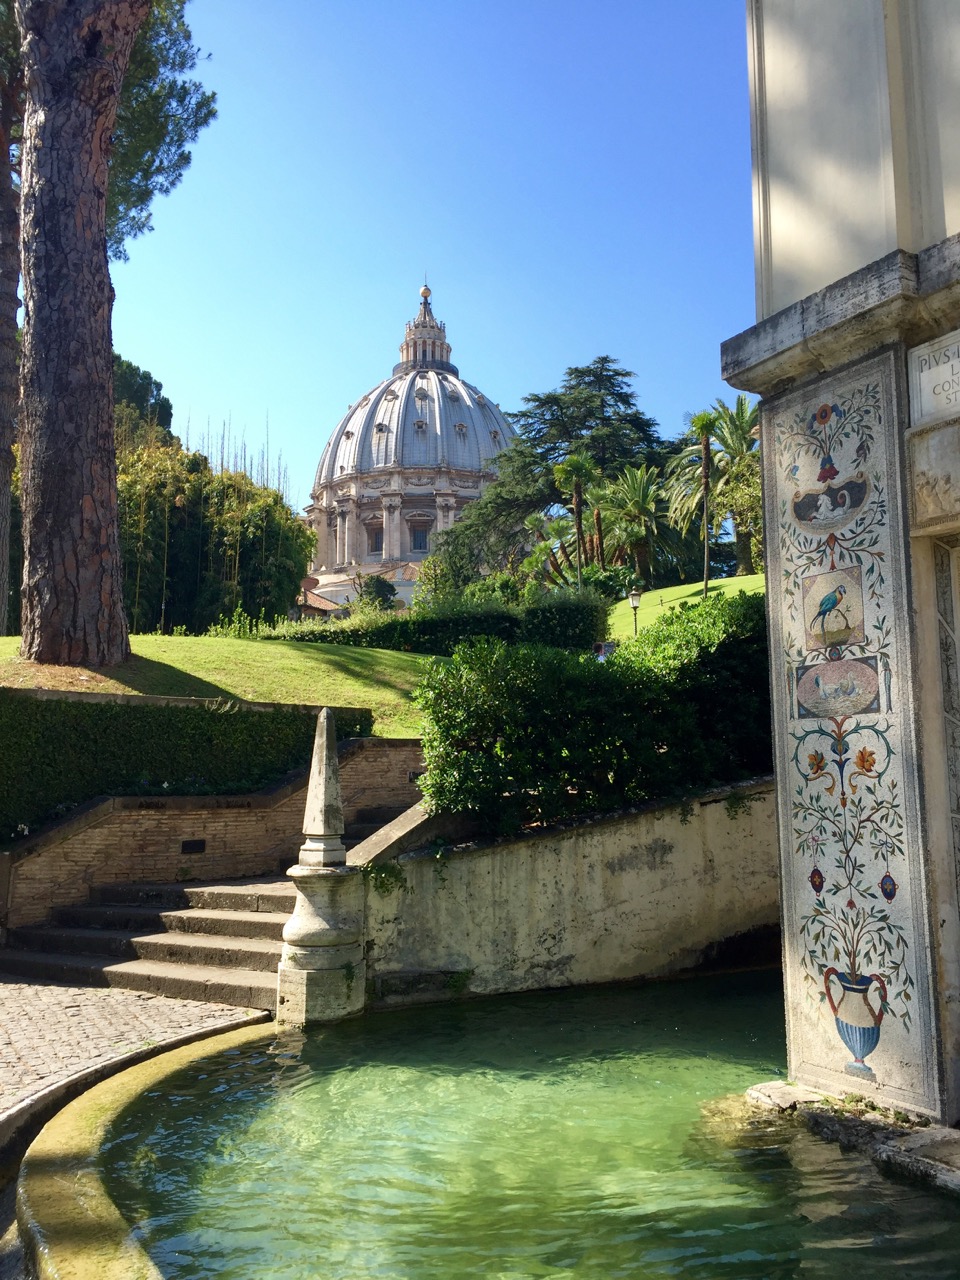 tour the vatican gardens